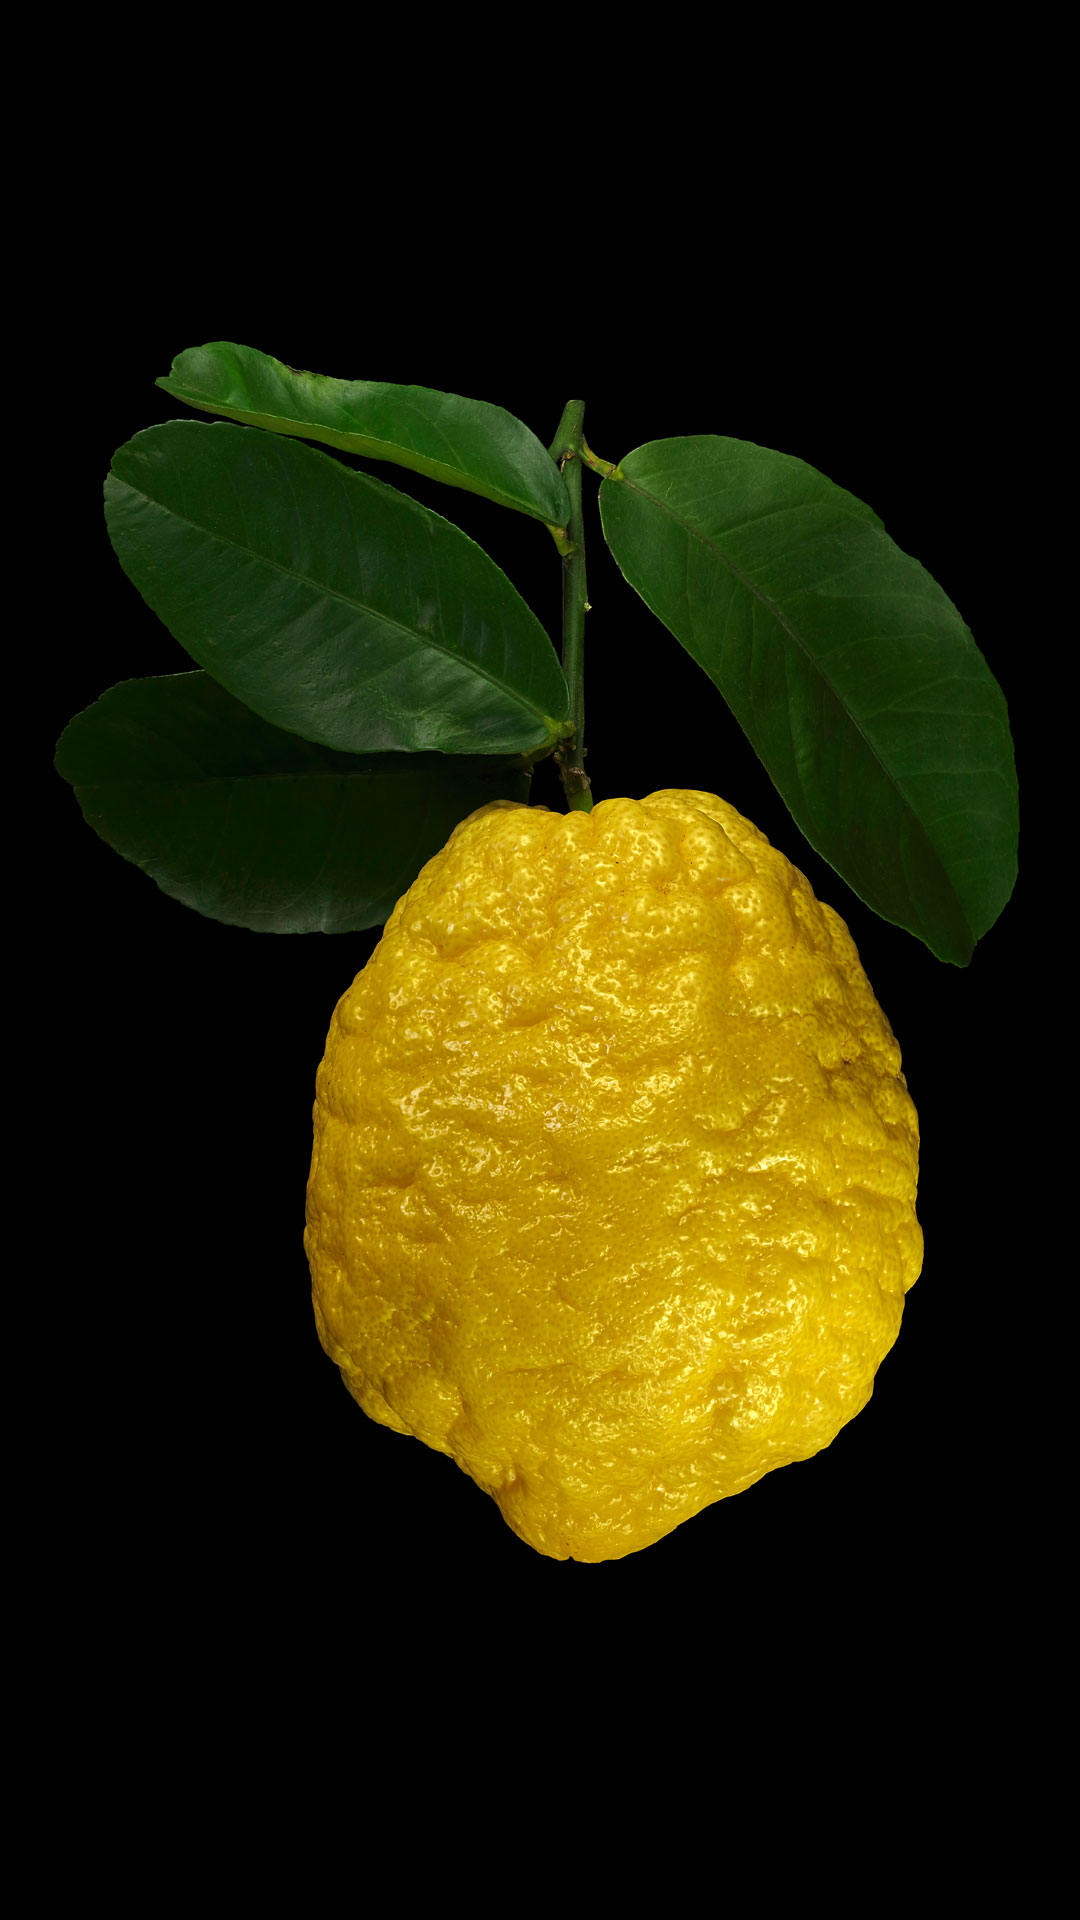 Citron: Citrus medica ‘Maxima’